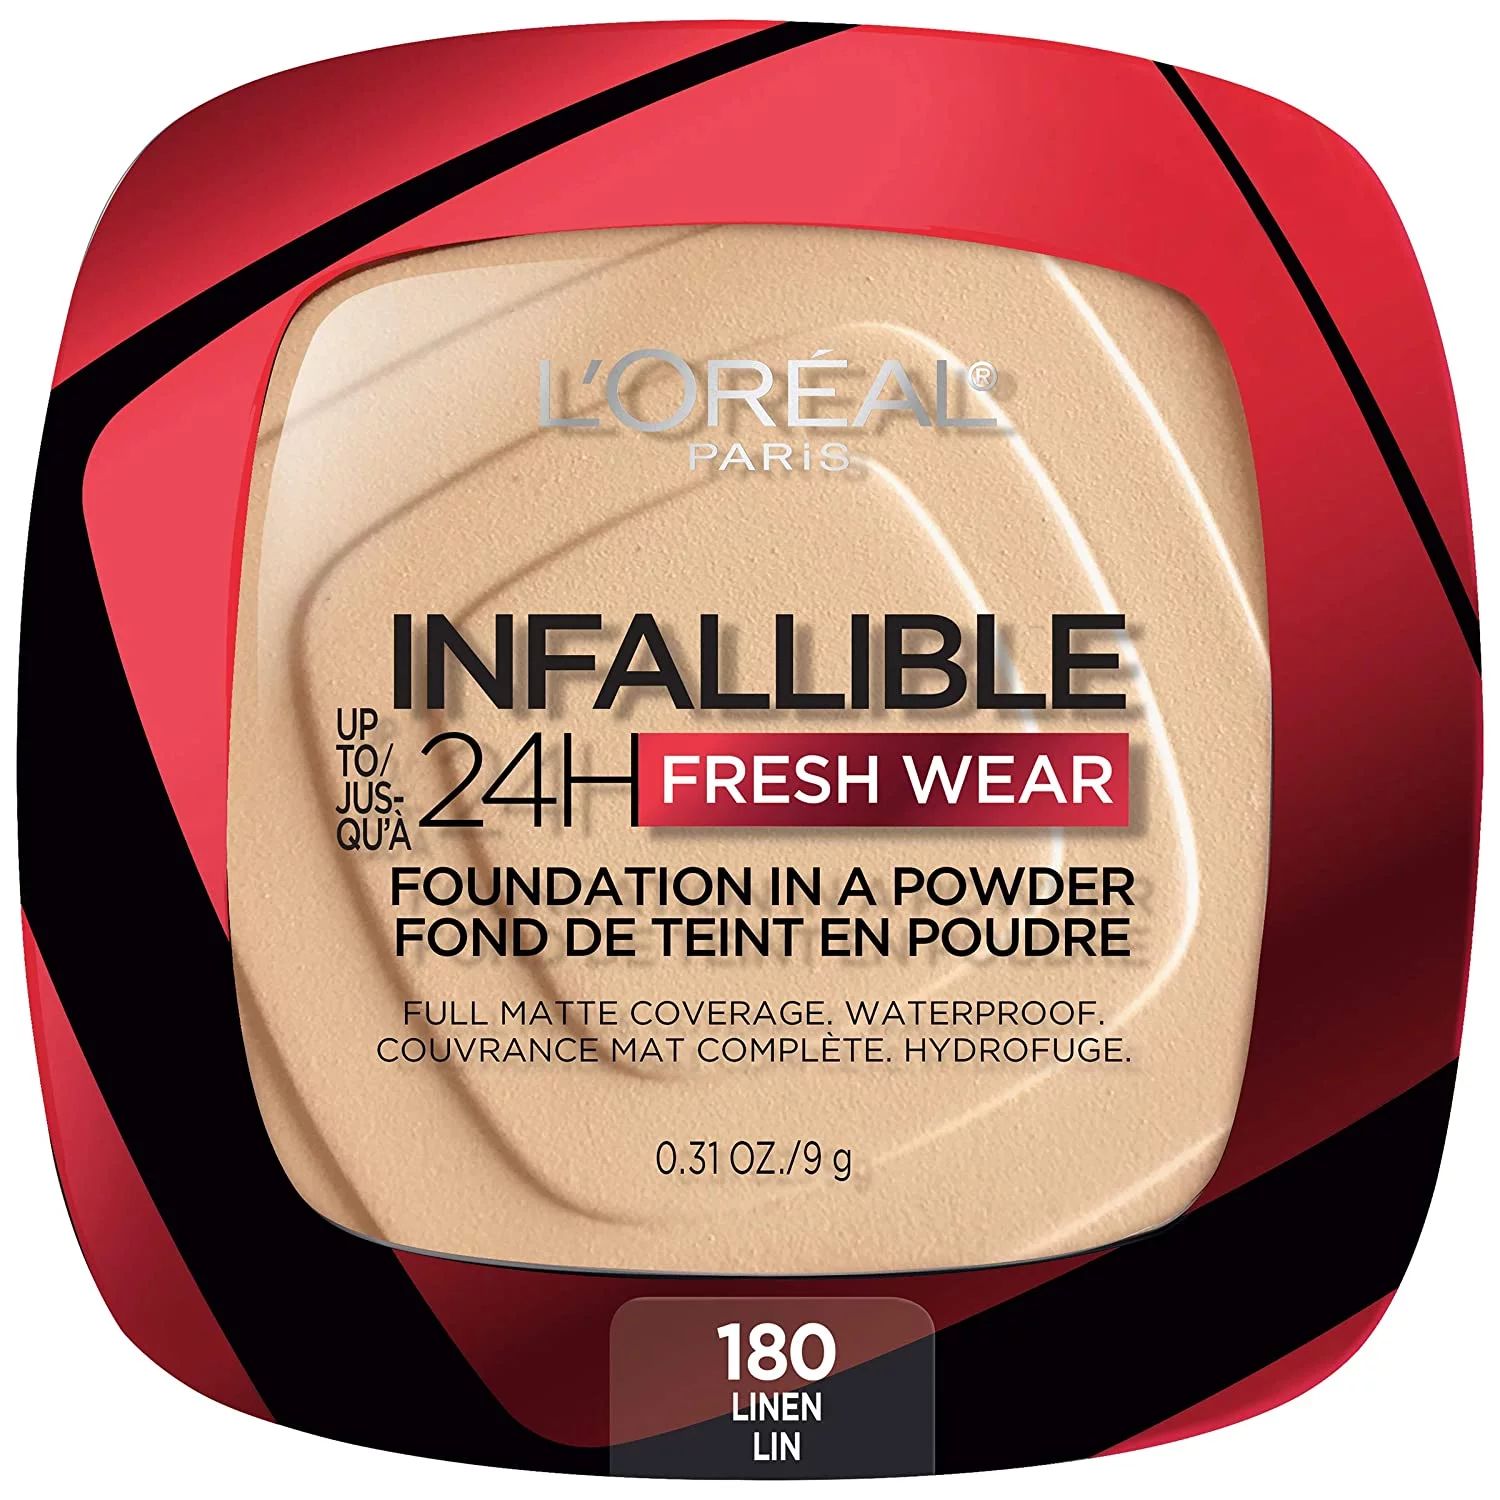 L'Oreal Paris Infallible Fresh Wear Foundation in a Powder, Up to 24H Wear, Linen, 0.31 oz. | Walmart (US)